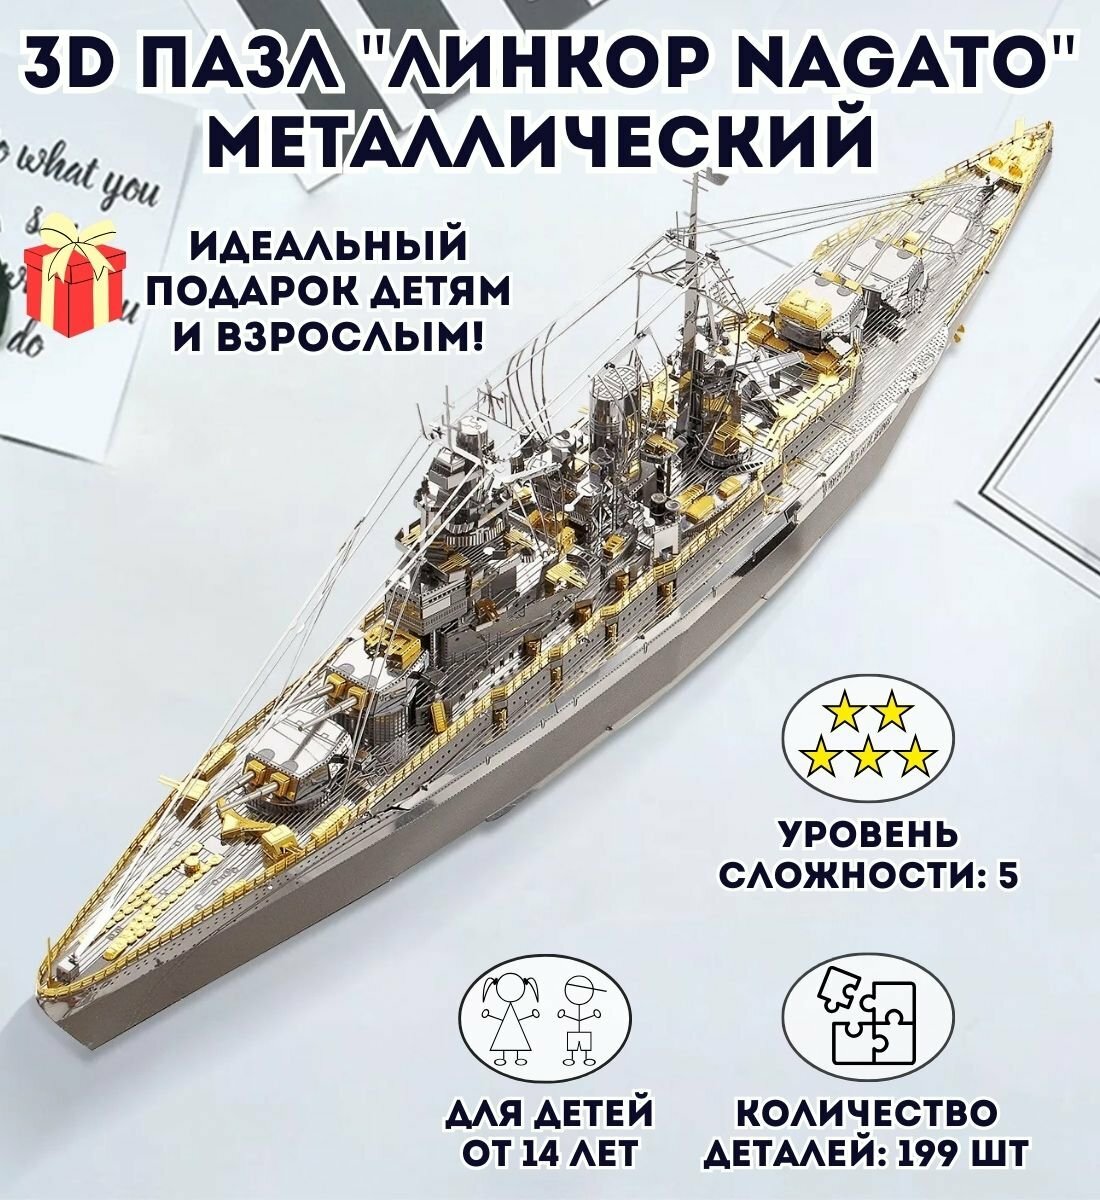 3D пазл металлический "Линкор Nagato" Luxury Gift сборная модель корабля